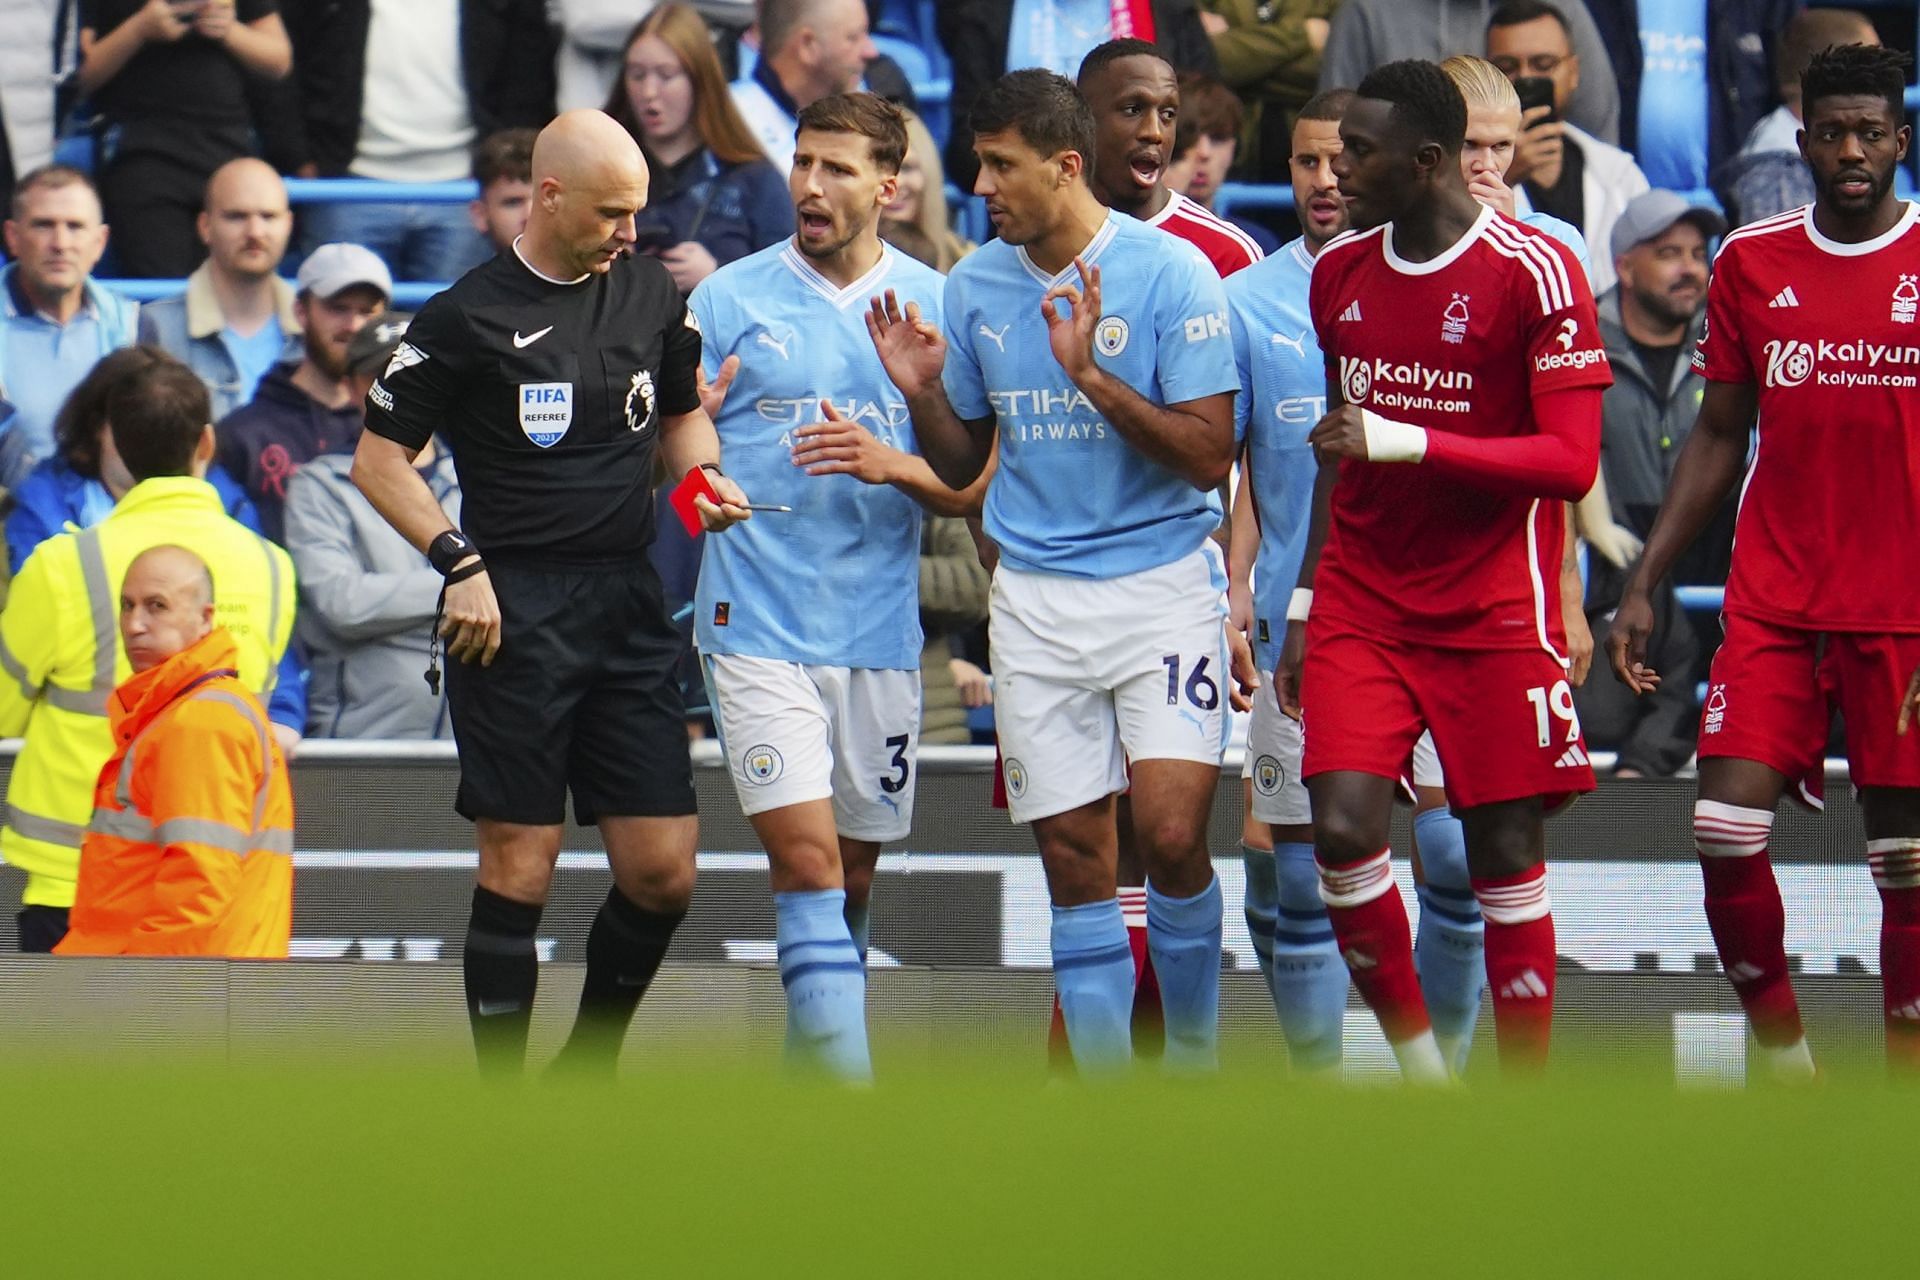 Rodri was shown red card against Nottingham